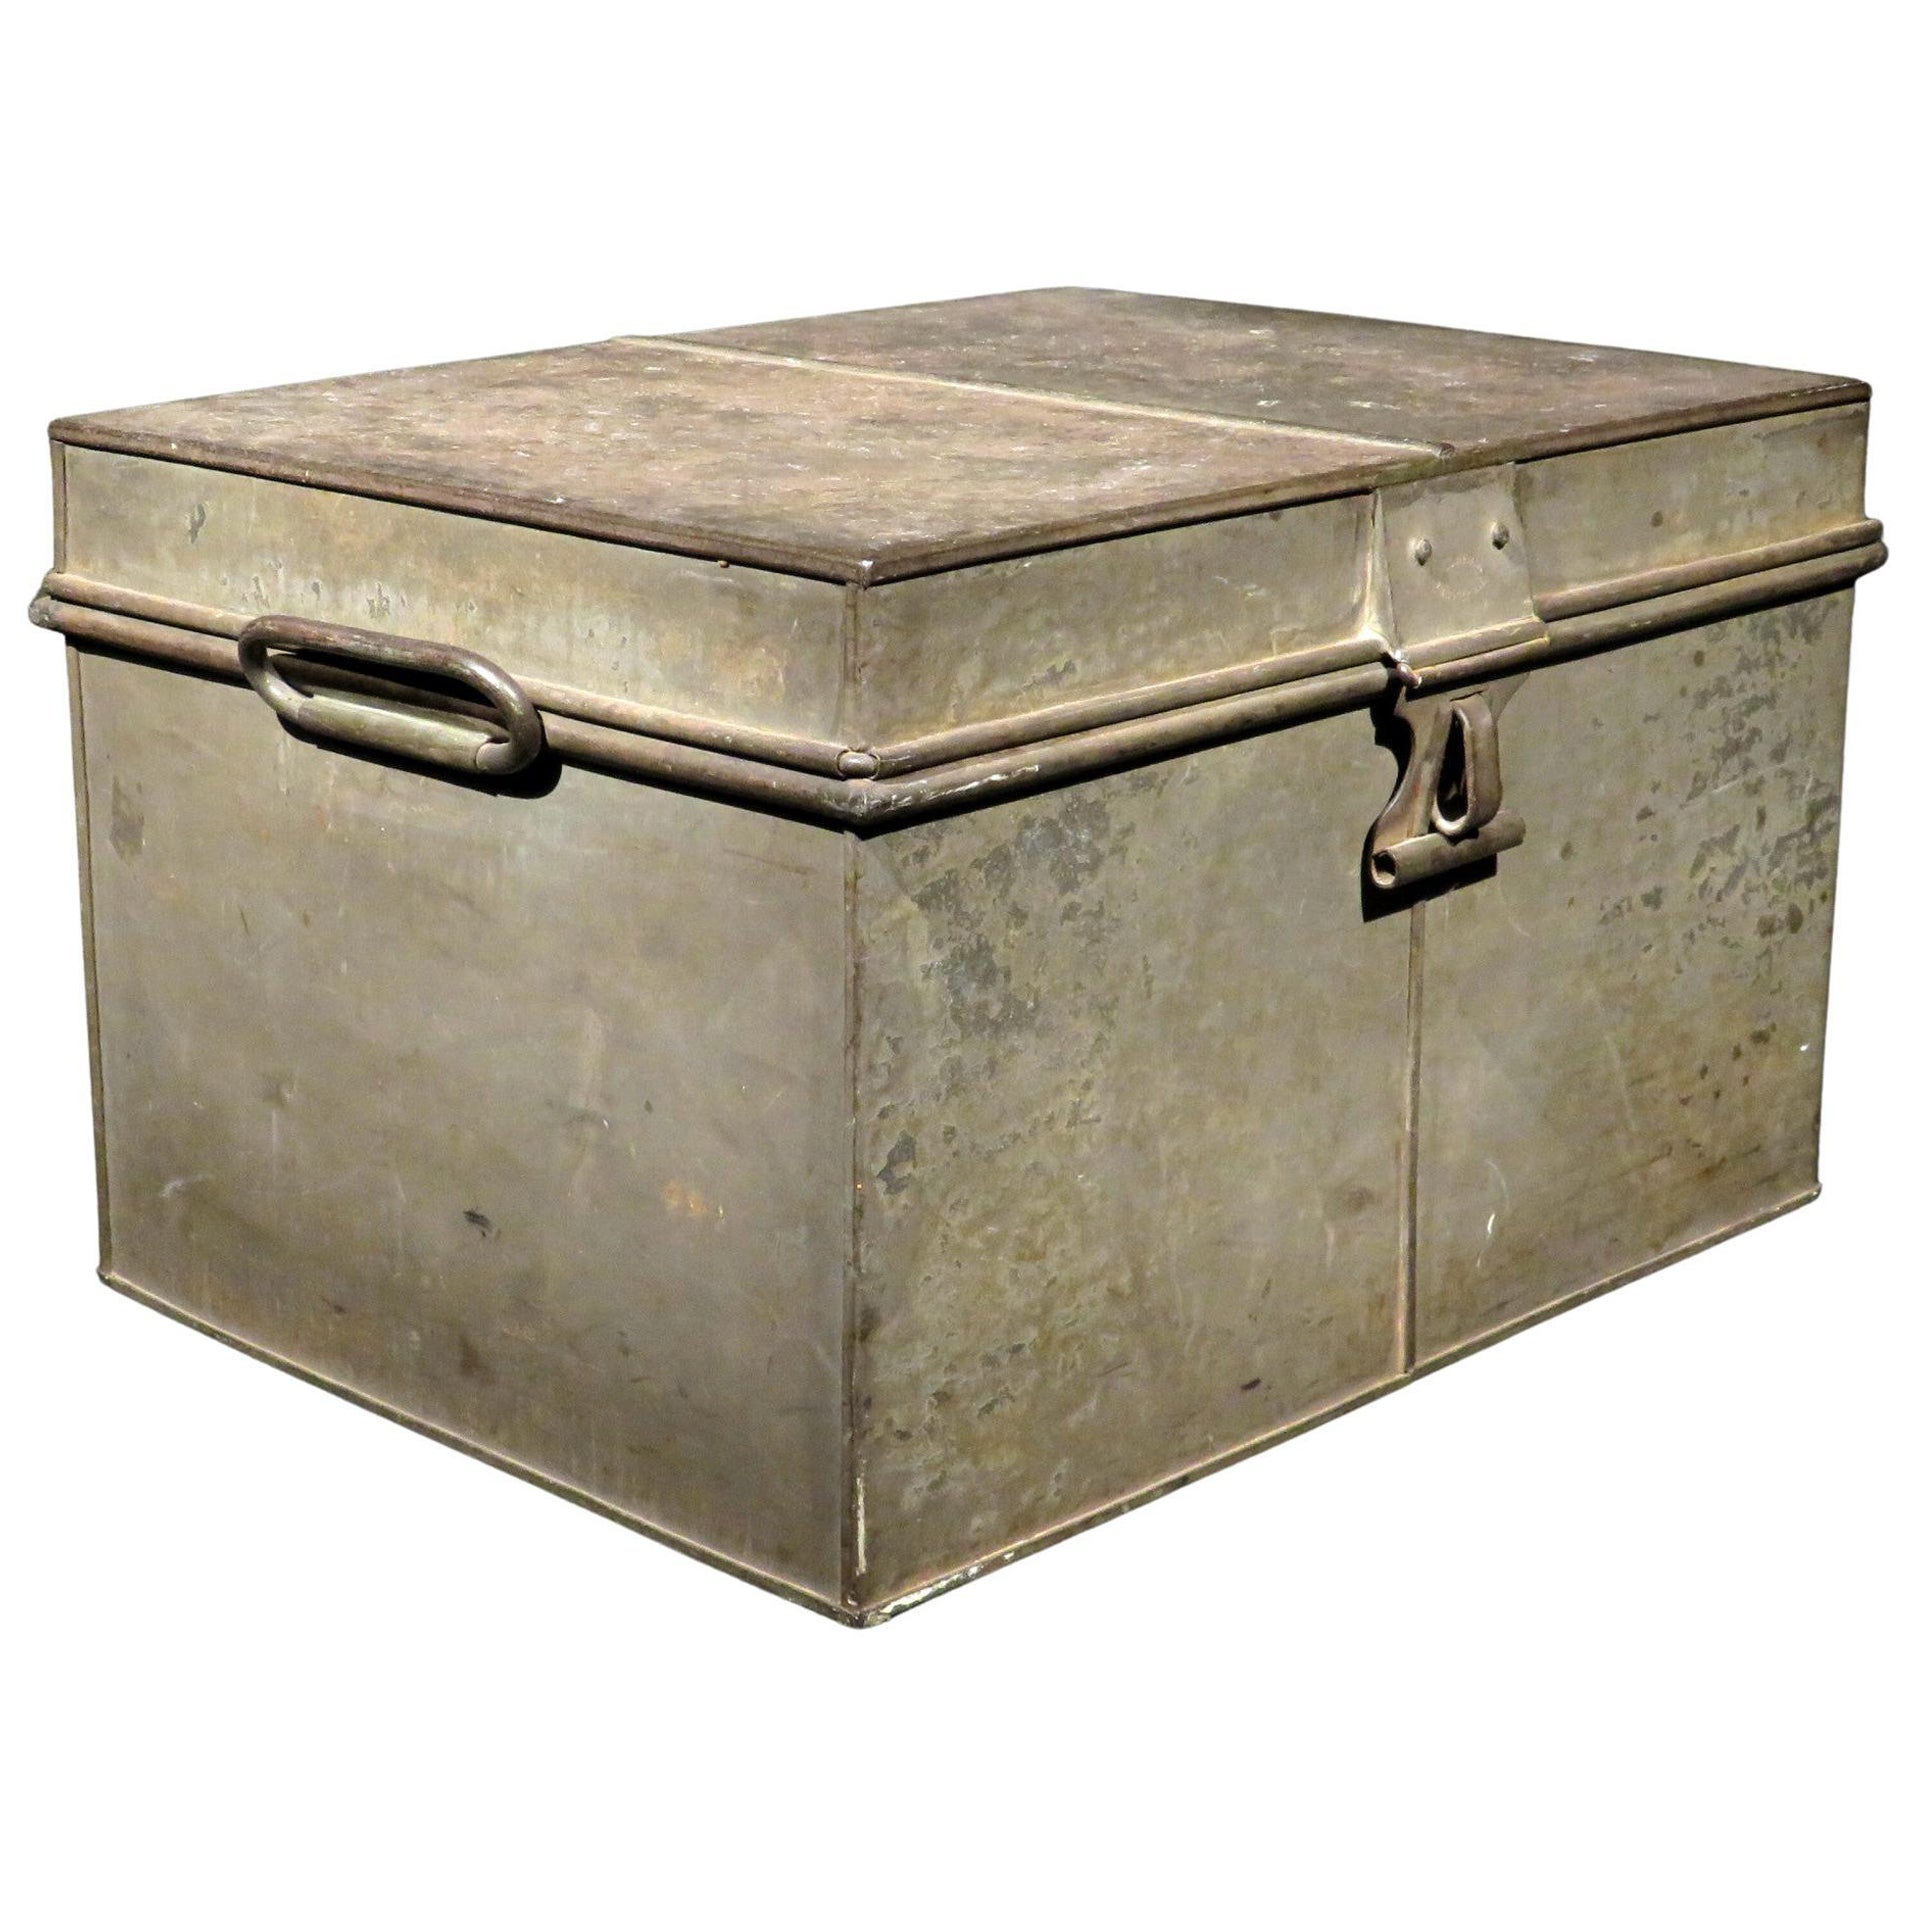 Authentic 19th Century Thomas Milner Patented Iron Safety Box, UK Circa 1840